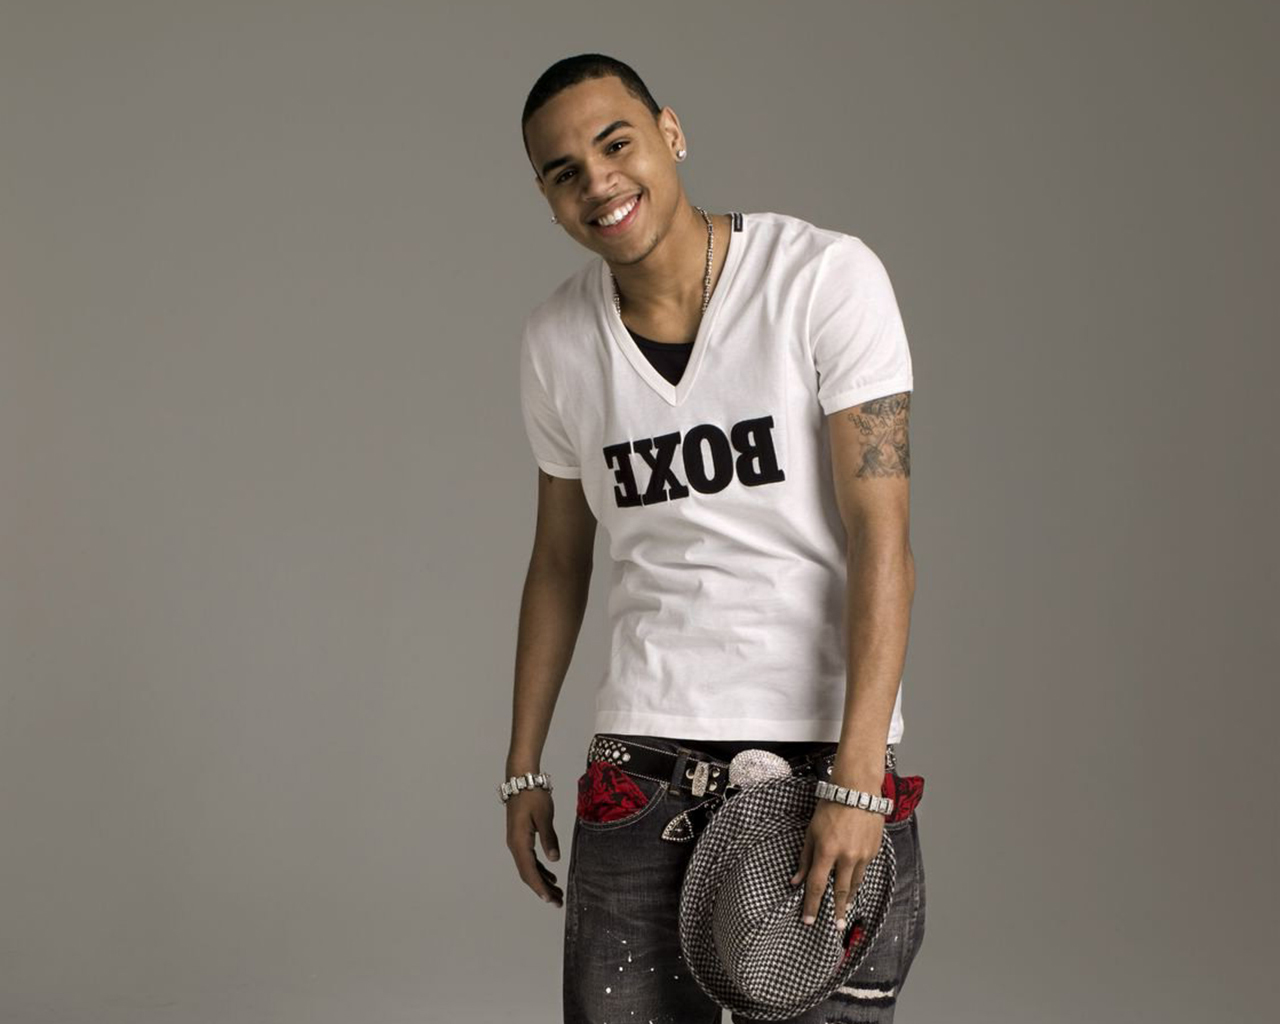 Chris Brown Wallpaper Rap Singer HD Image X Music Album